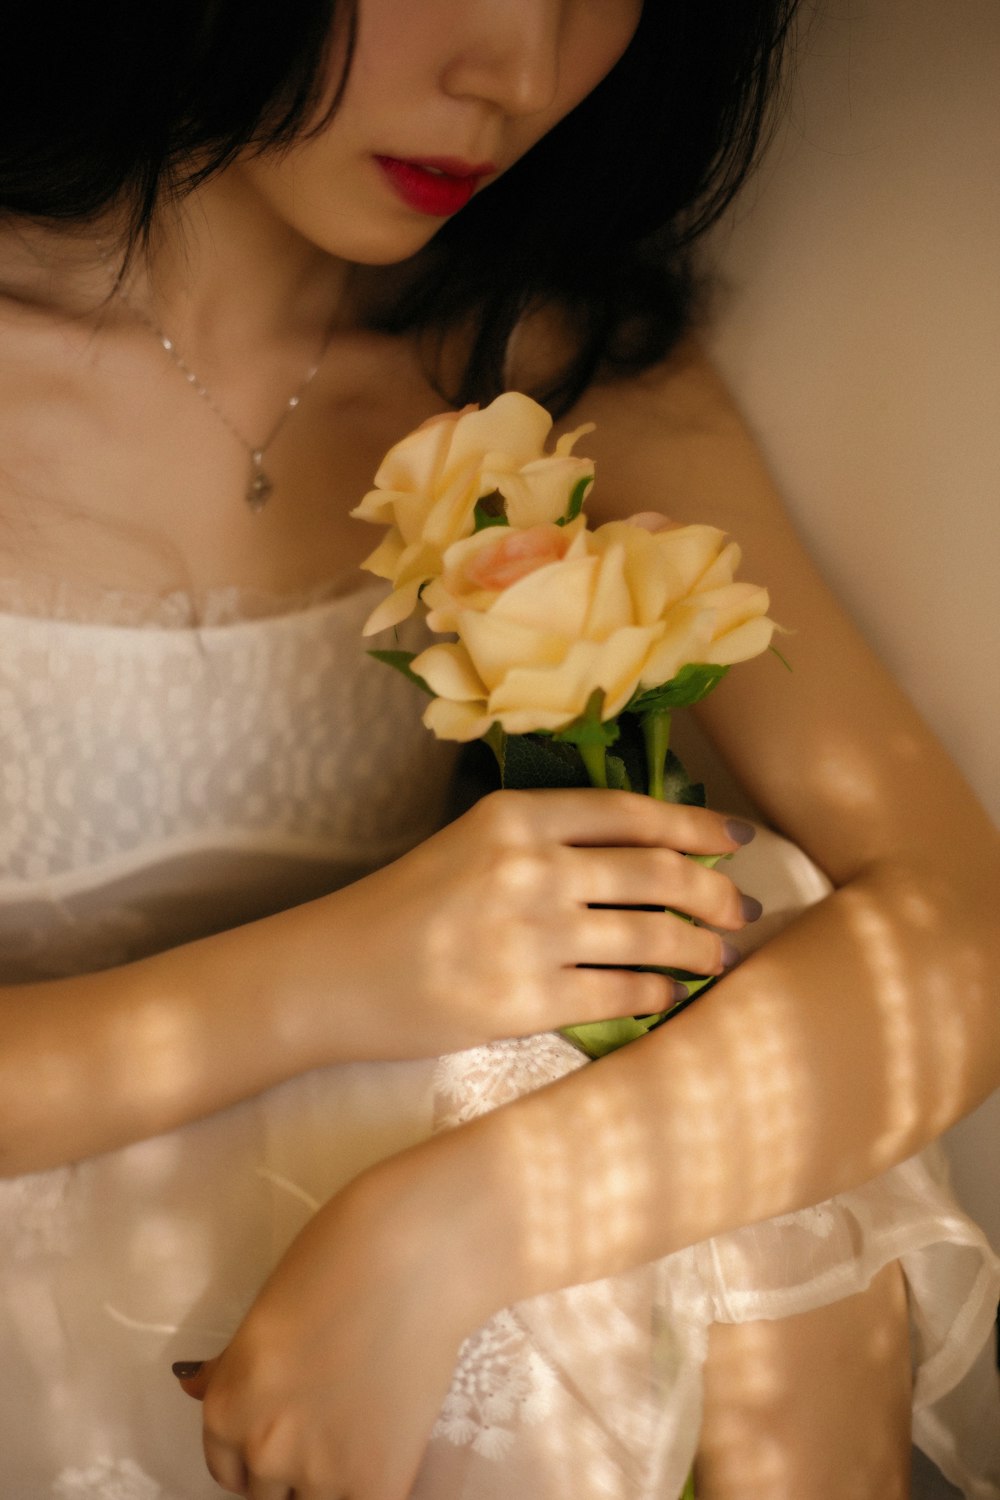 person in white strapless dress holding orange rose